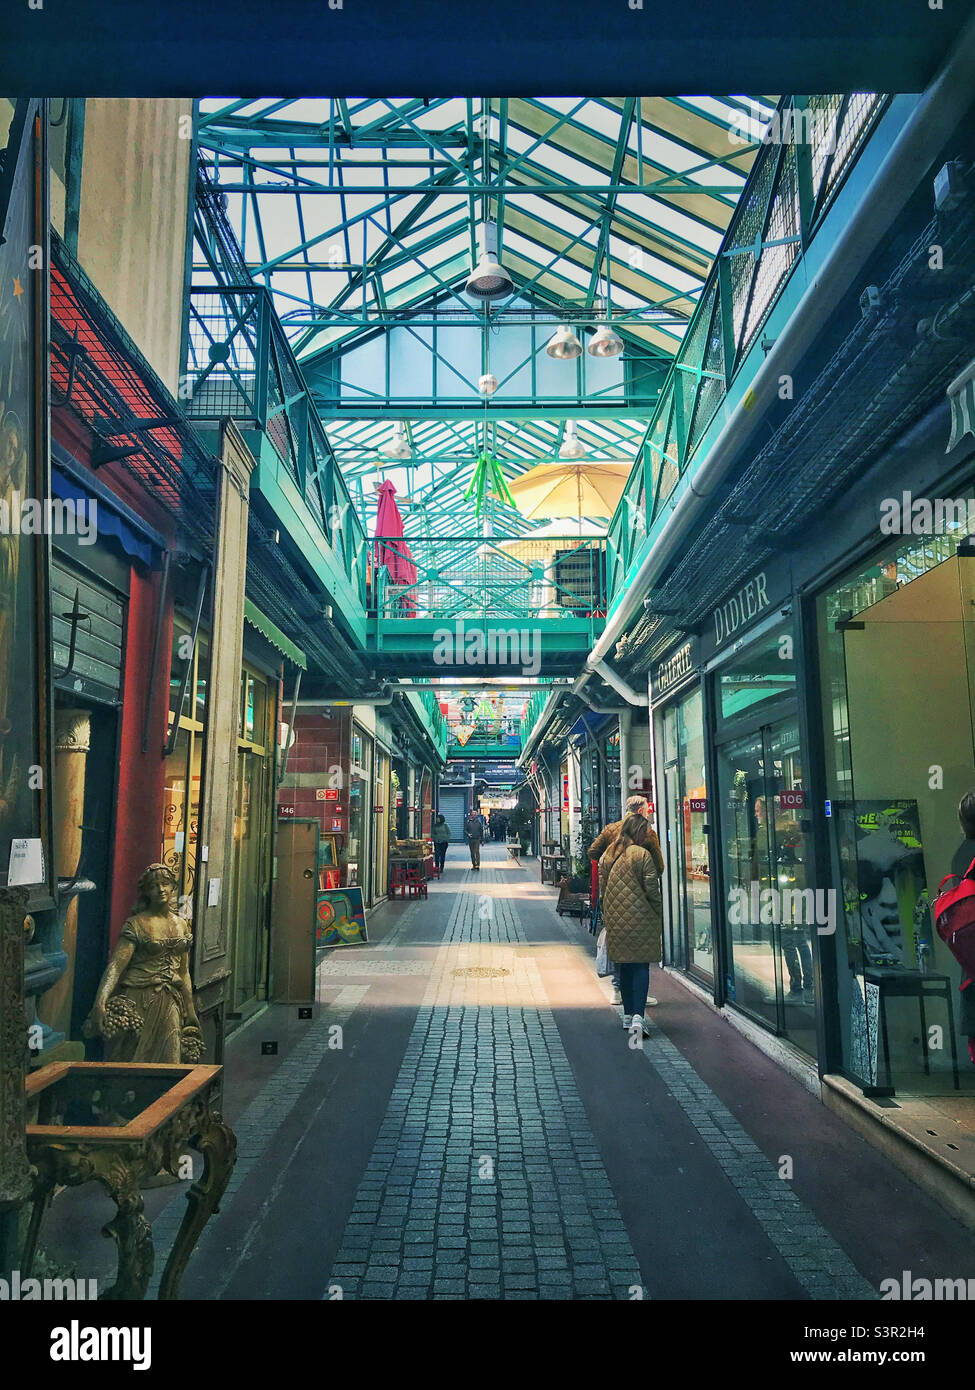 The interior of the Dauphine Flea / Antique Market in Saint-Ouen, Paris, France Stock Photo